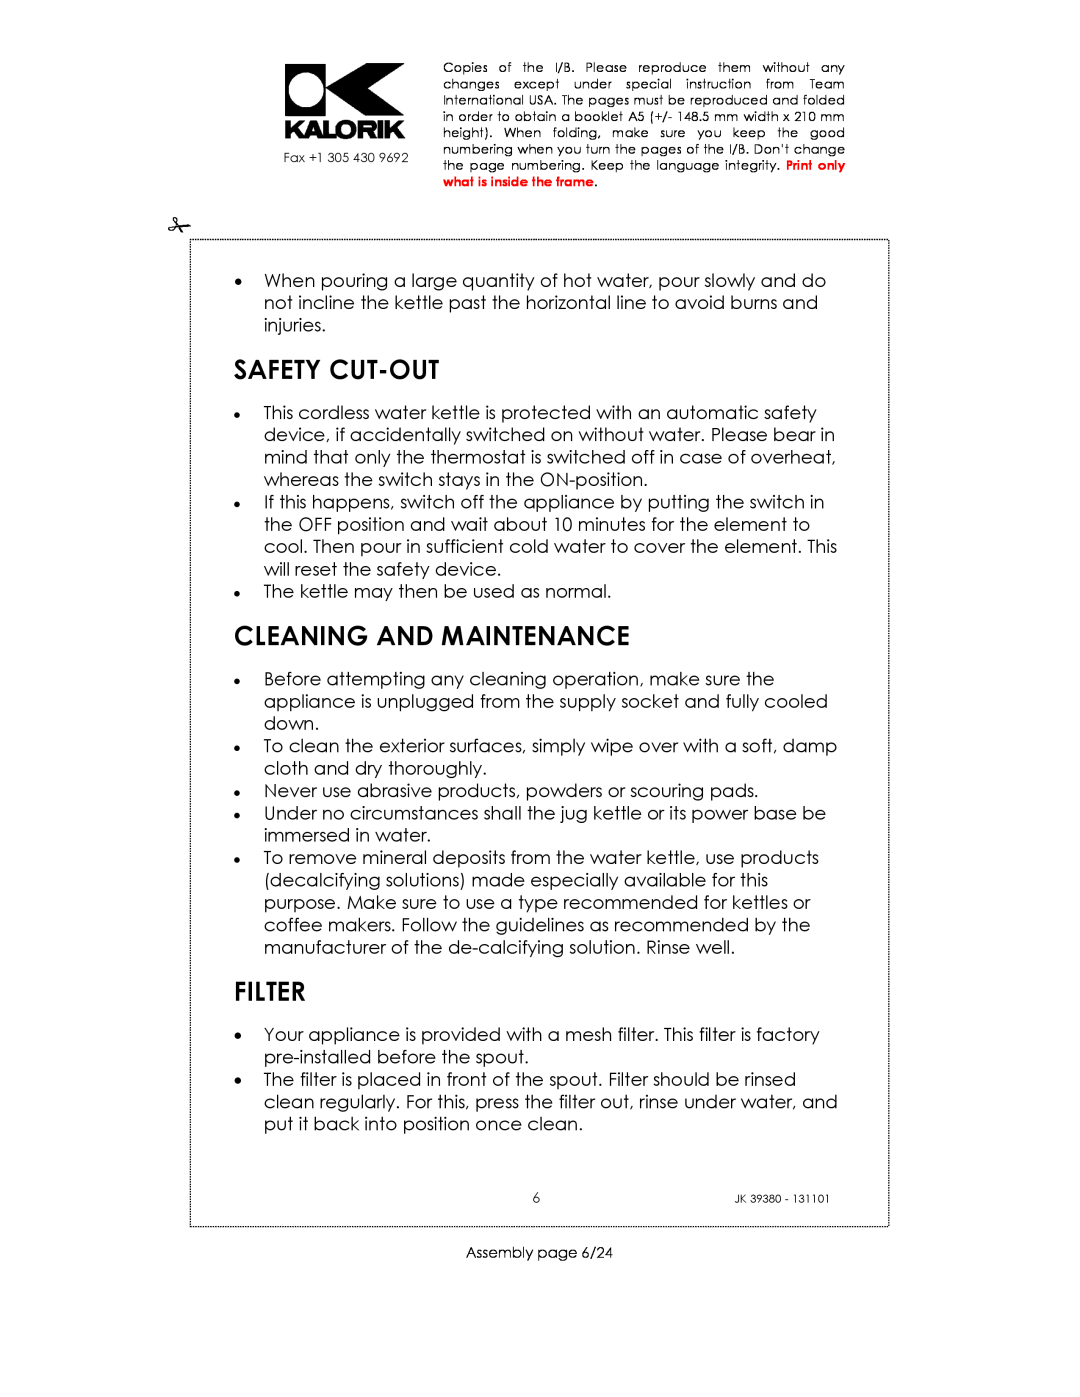 Kalorik JK 39380 manual Safety Cut-Out, Cleaning And Maintenance, Filter 